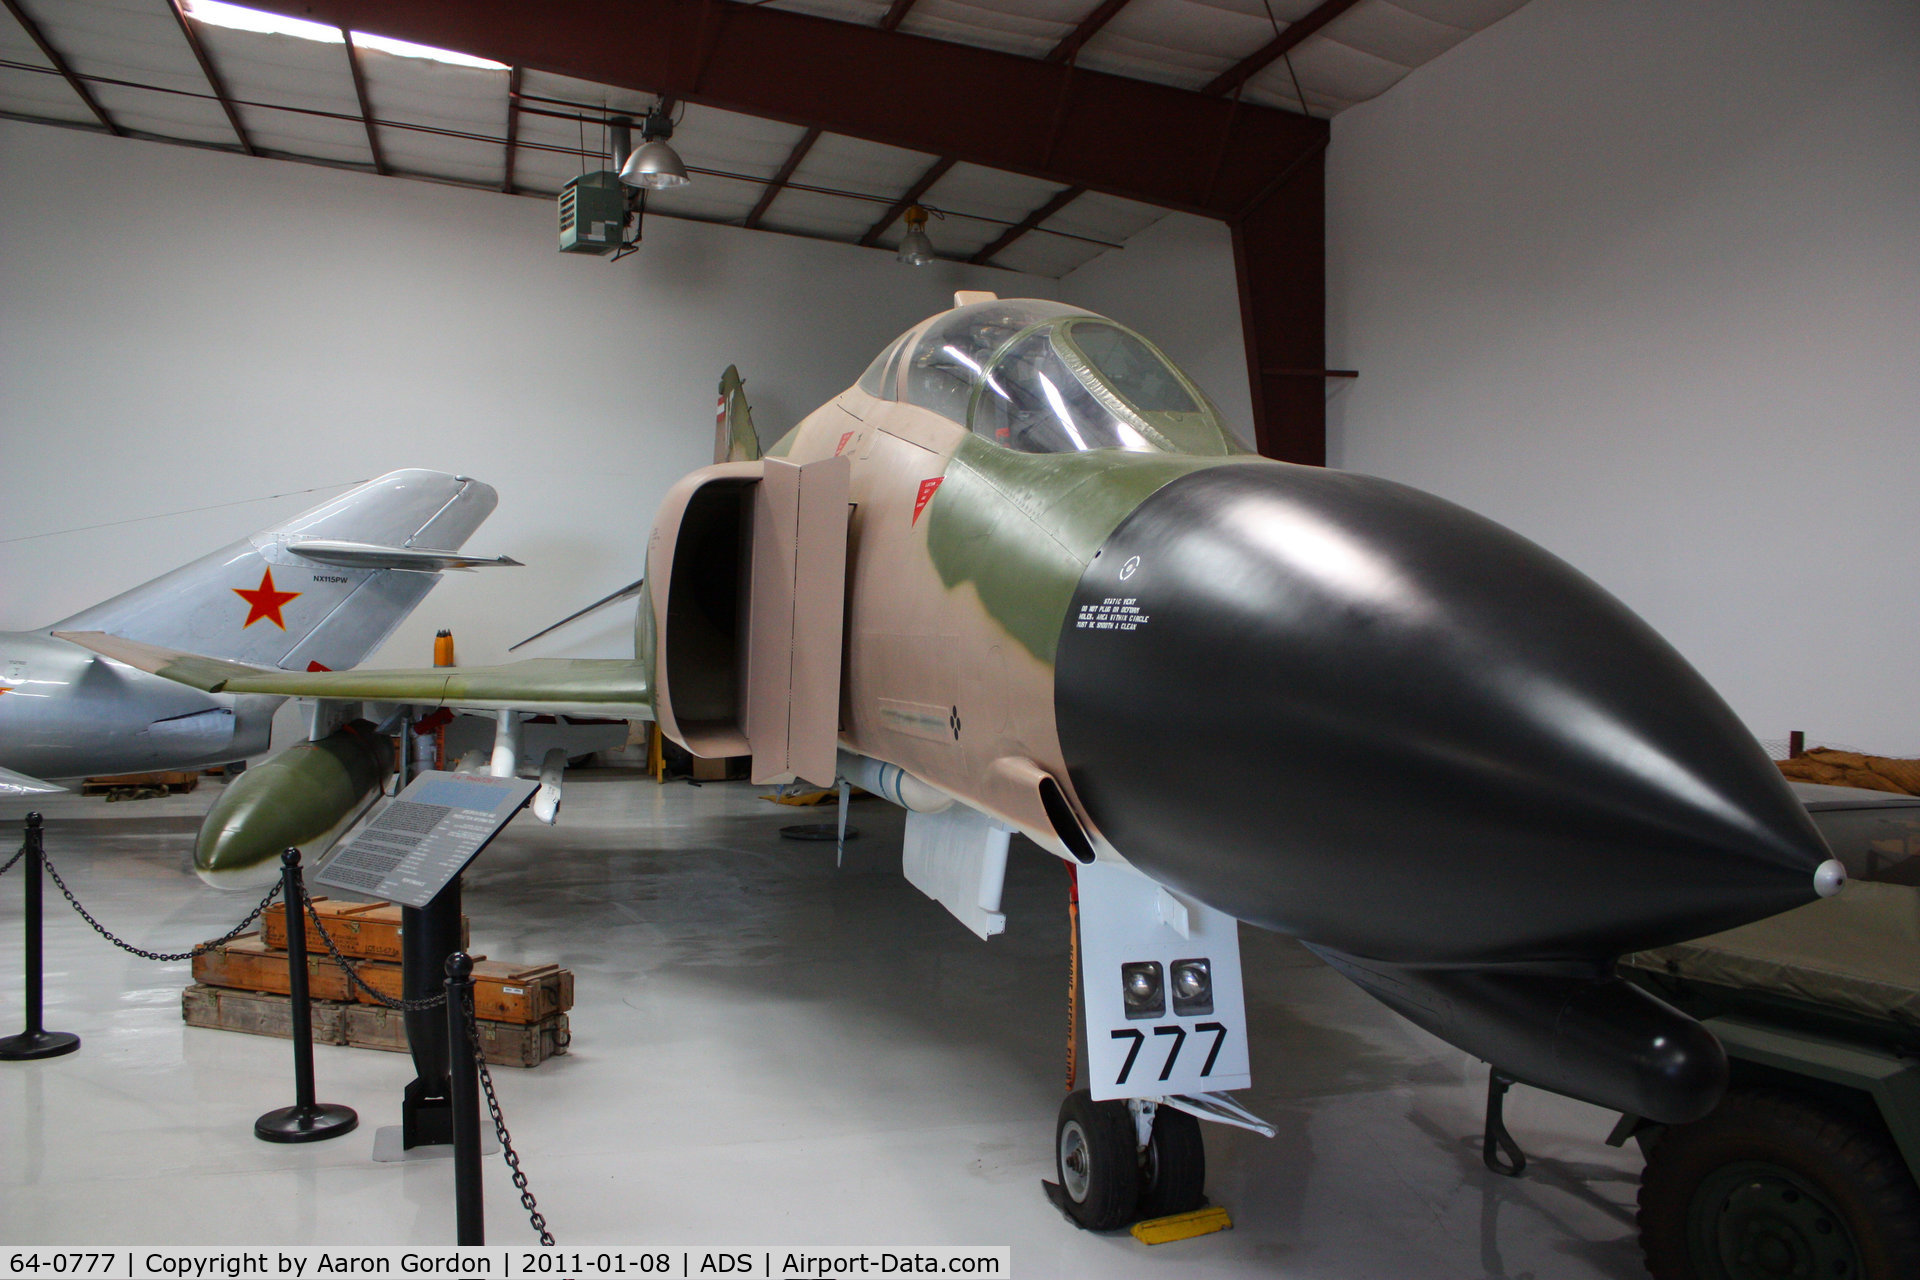 64-0777, 1964 McDonnell F-4C Phantom II C/N 1080, F-4C 64-0777 at the Cavanaugh flight museum.